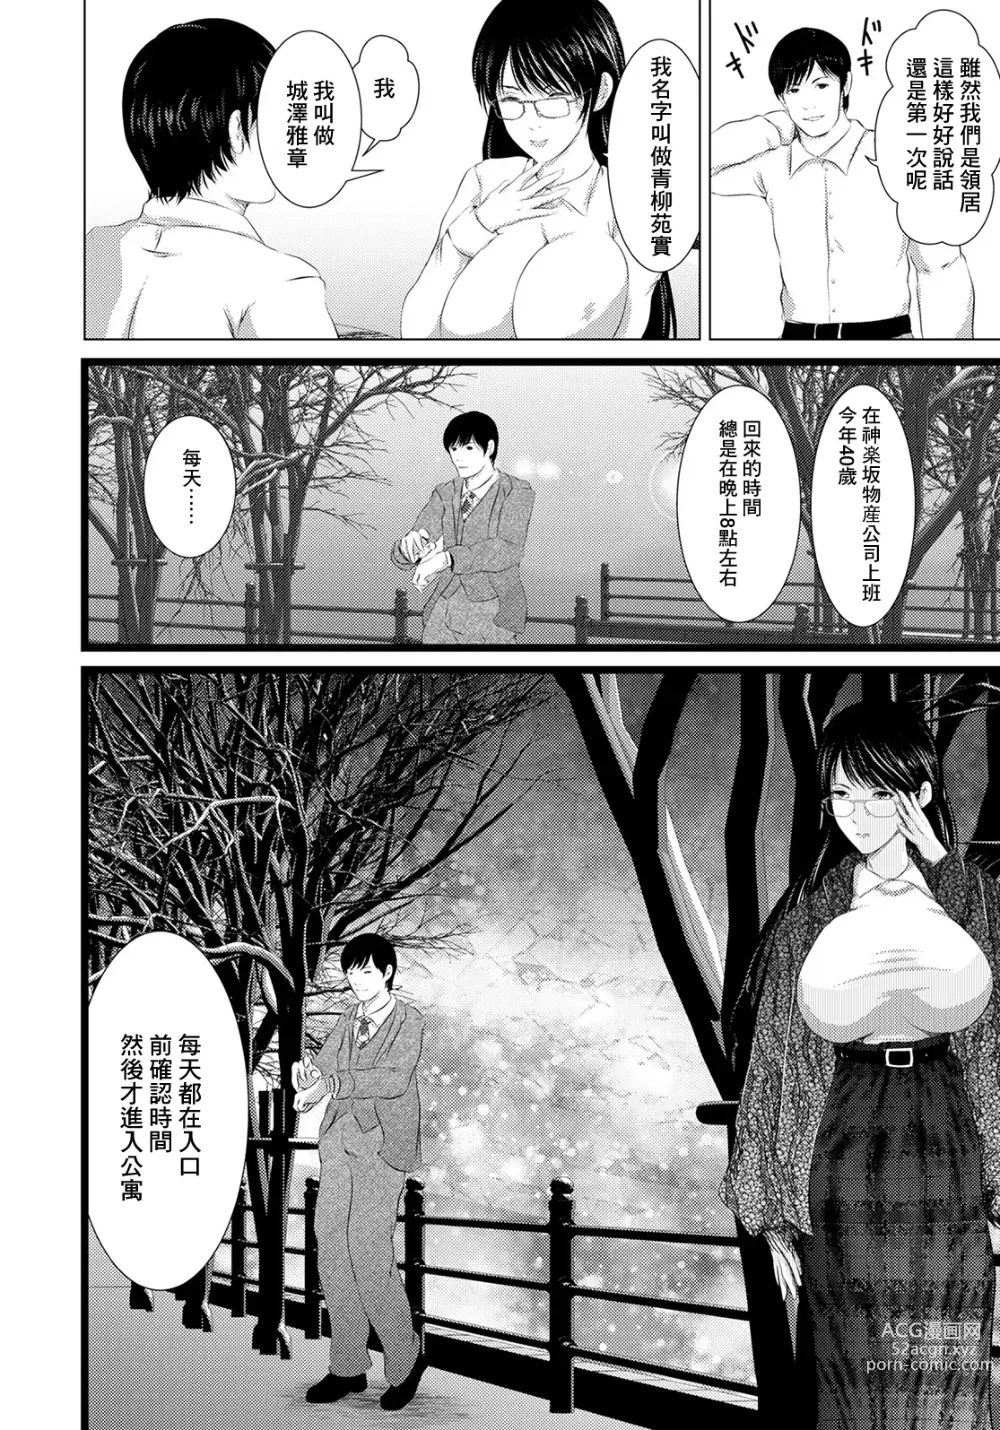 Page 6 of manga Tonari no Onna